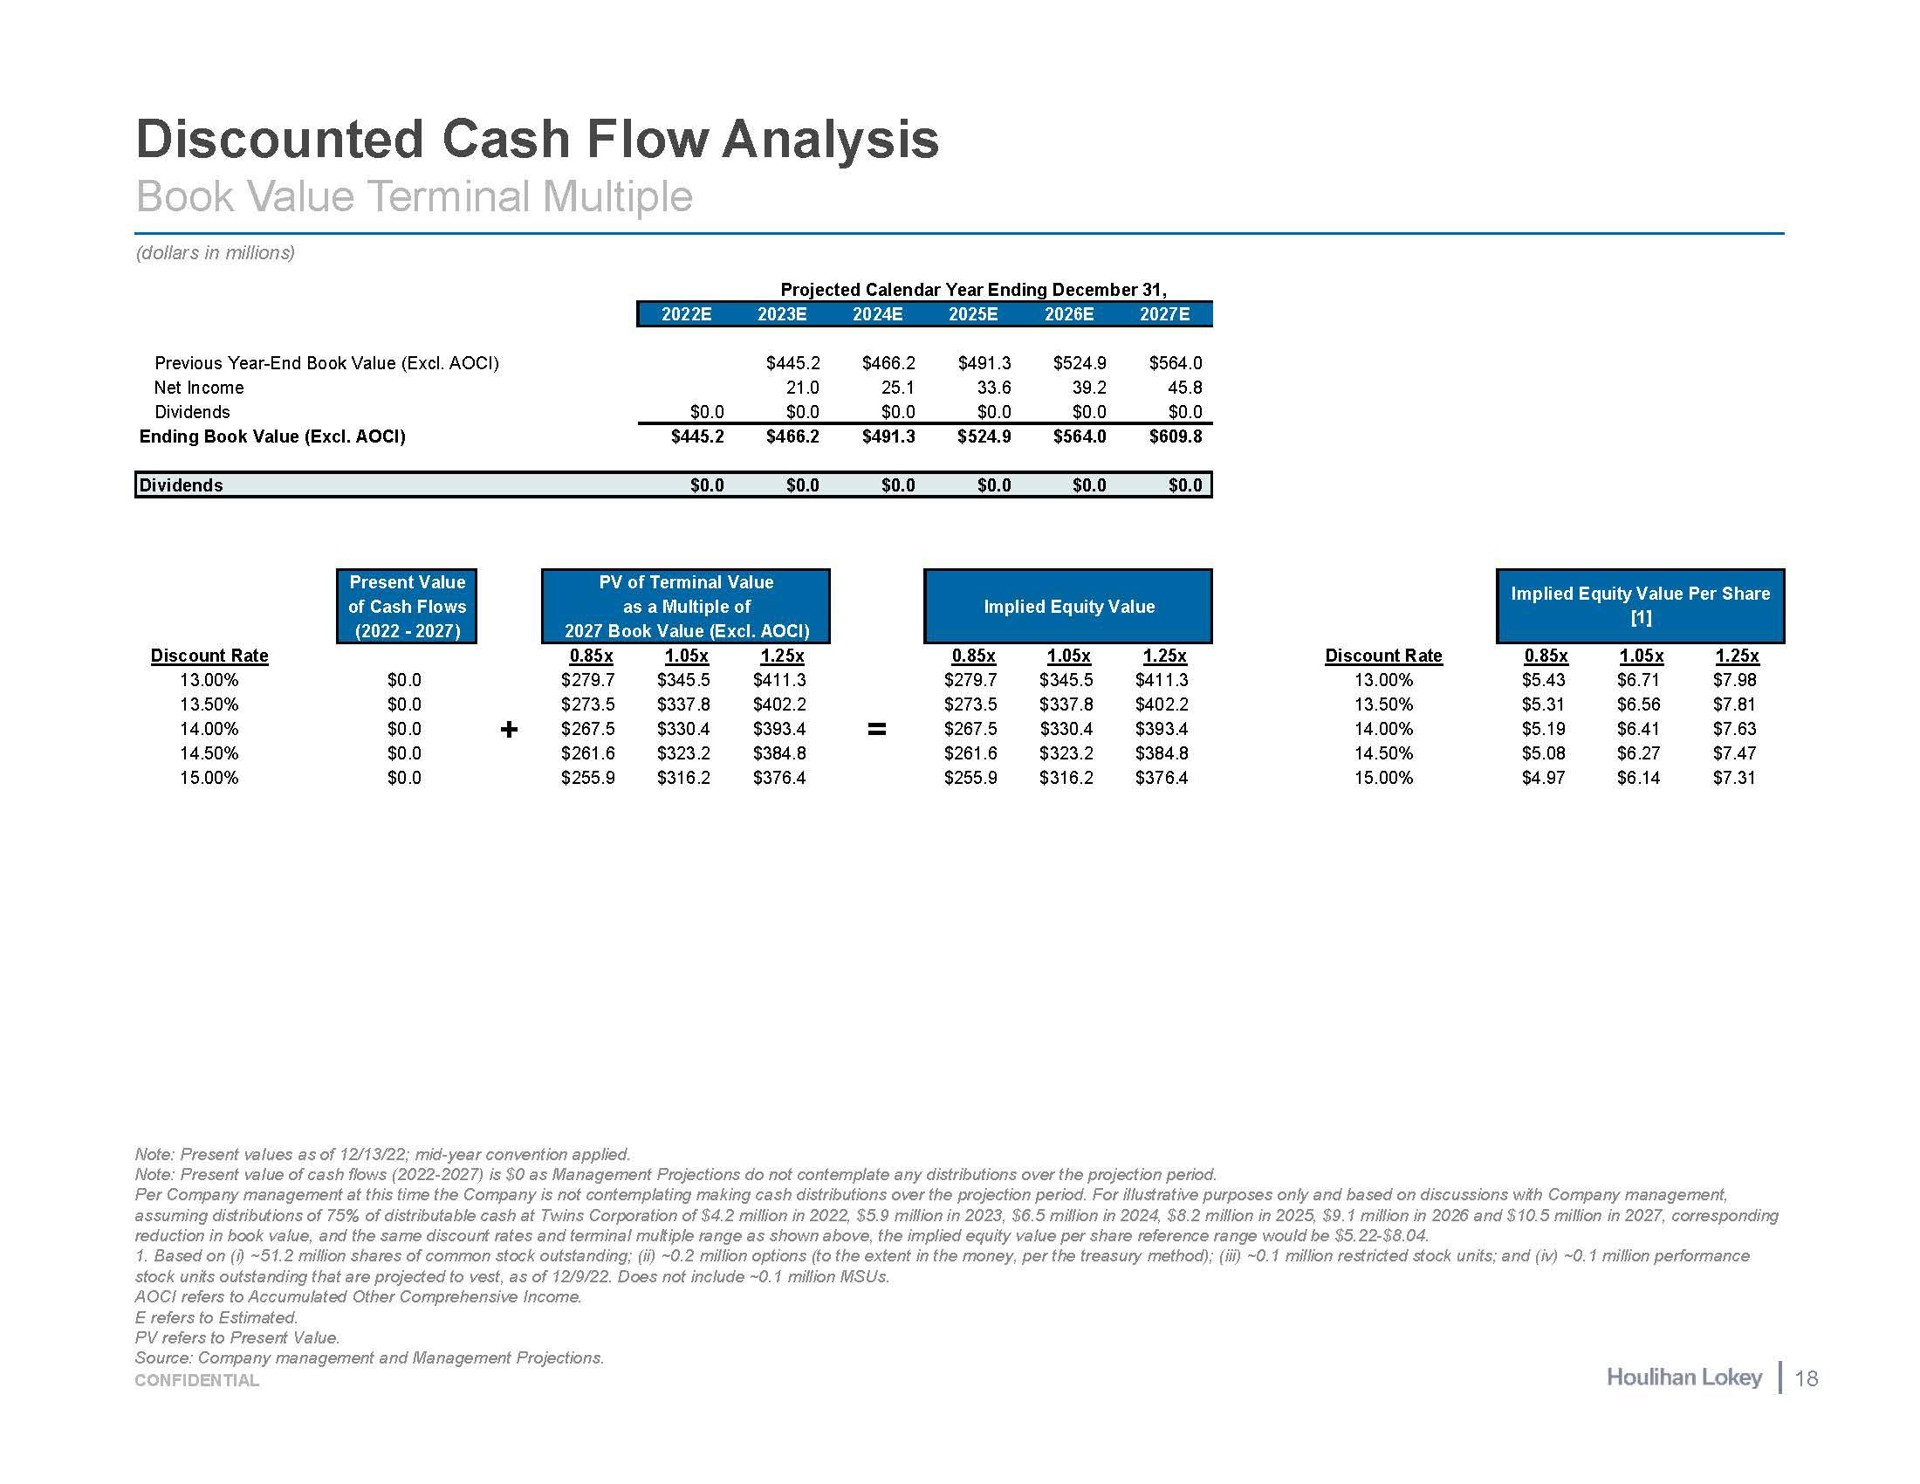 discounted cash flow analysis | Houlihan Lokey